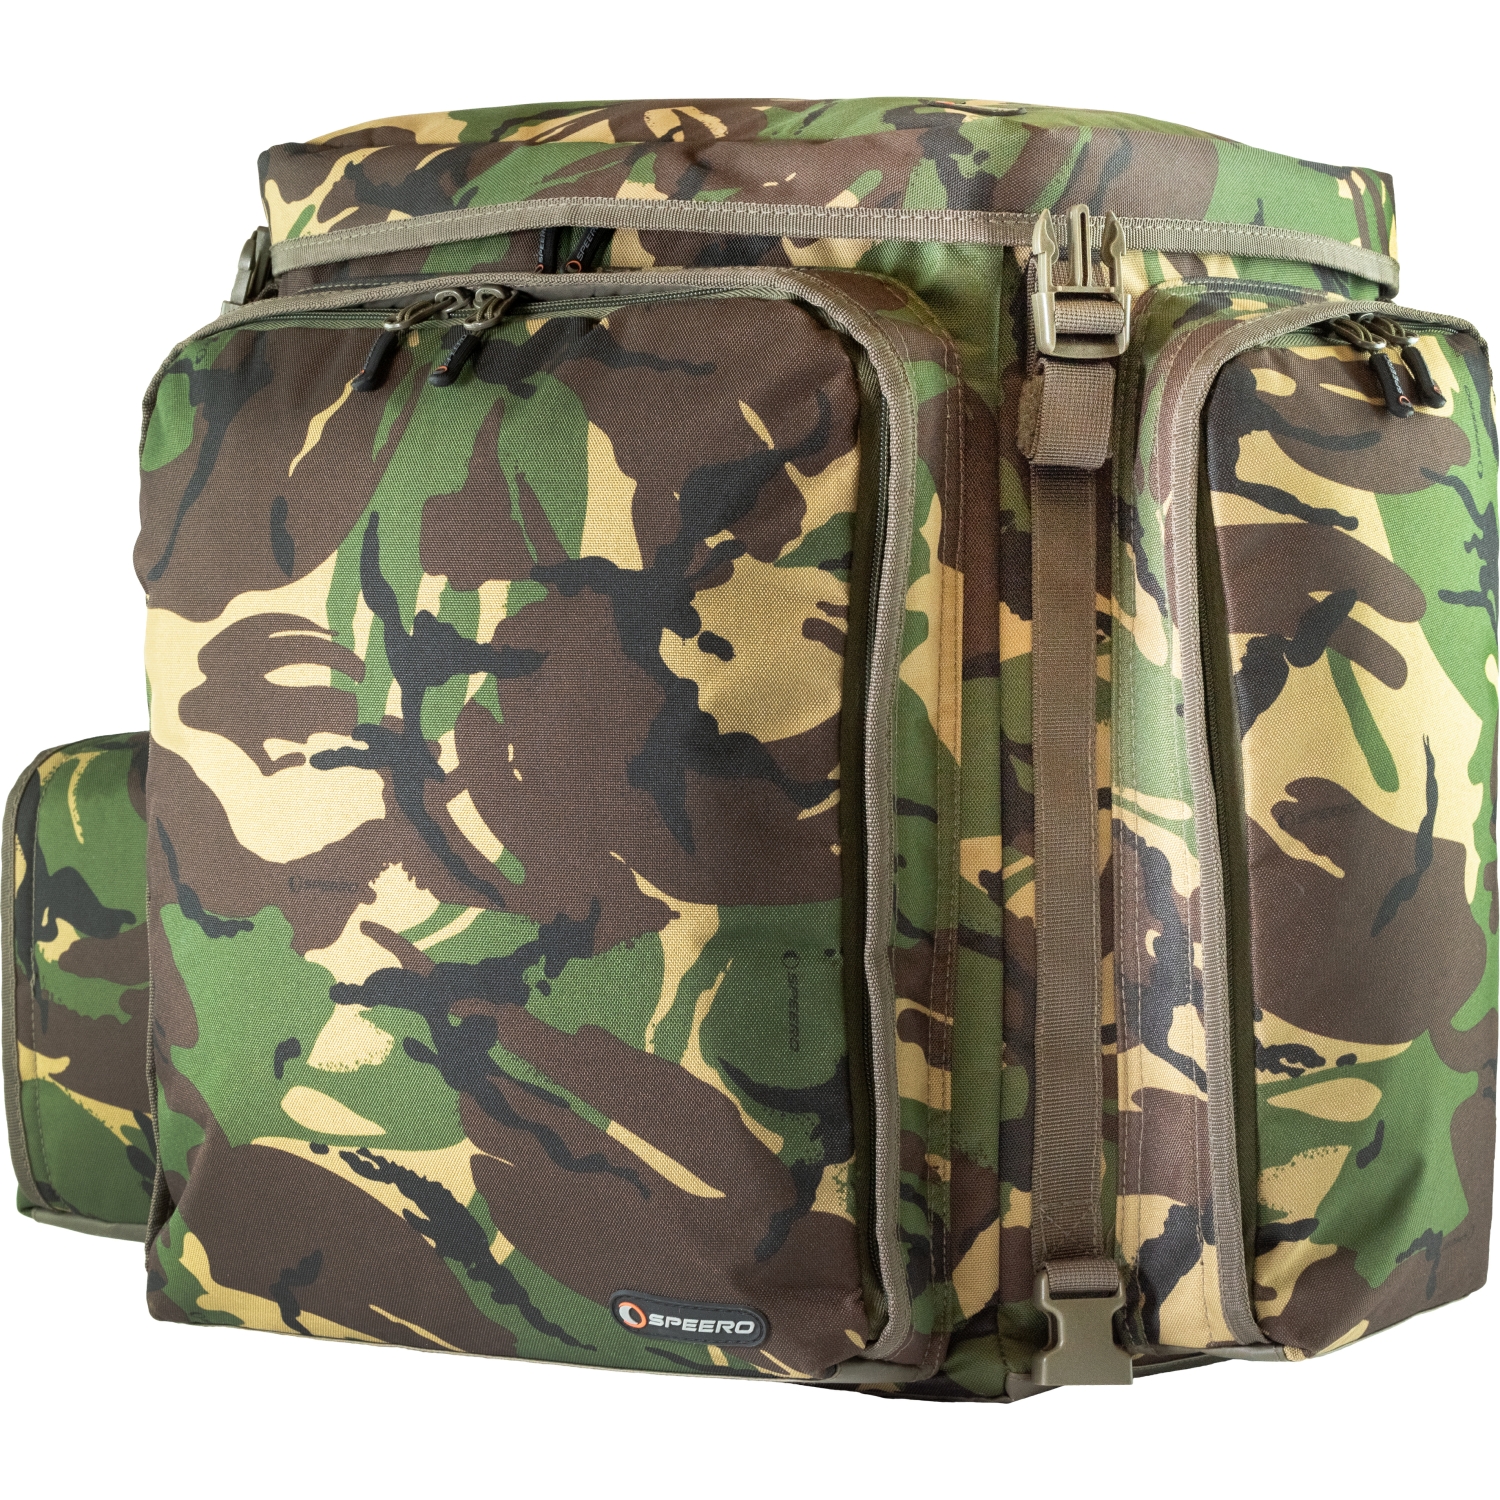 Speero Rucksack Carp Fishing Tackle Bag DPM, Green Bank Kit Military ...